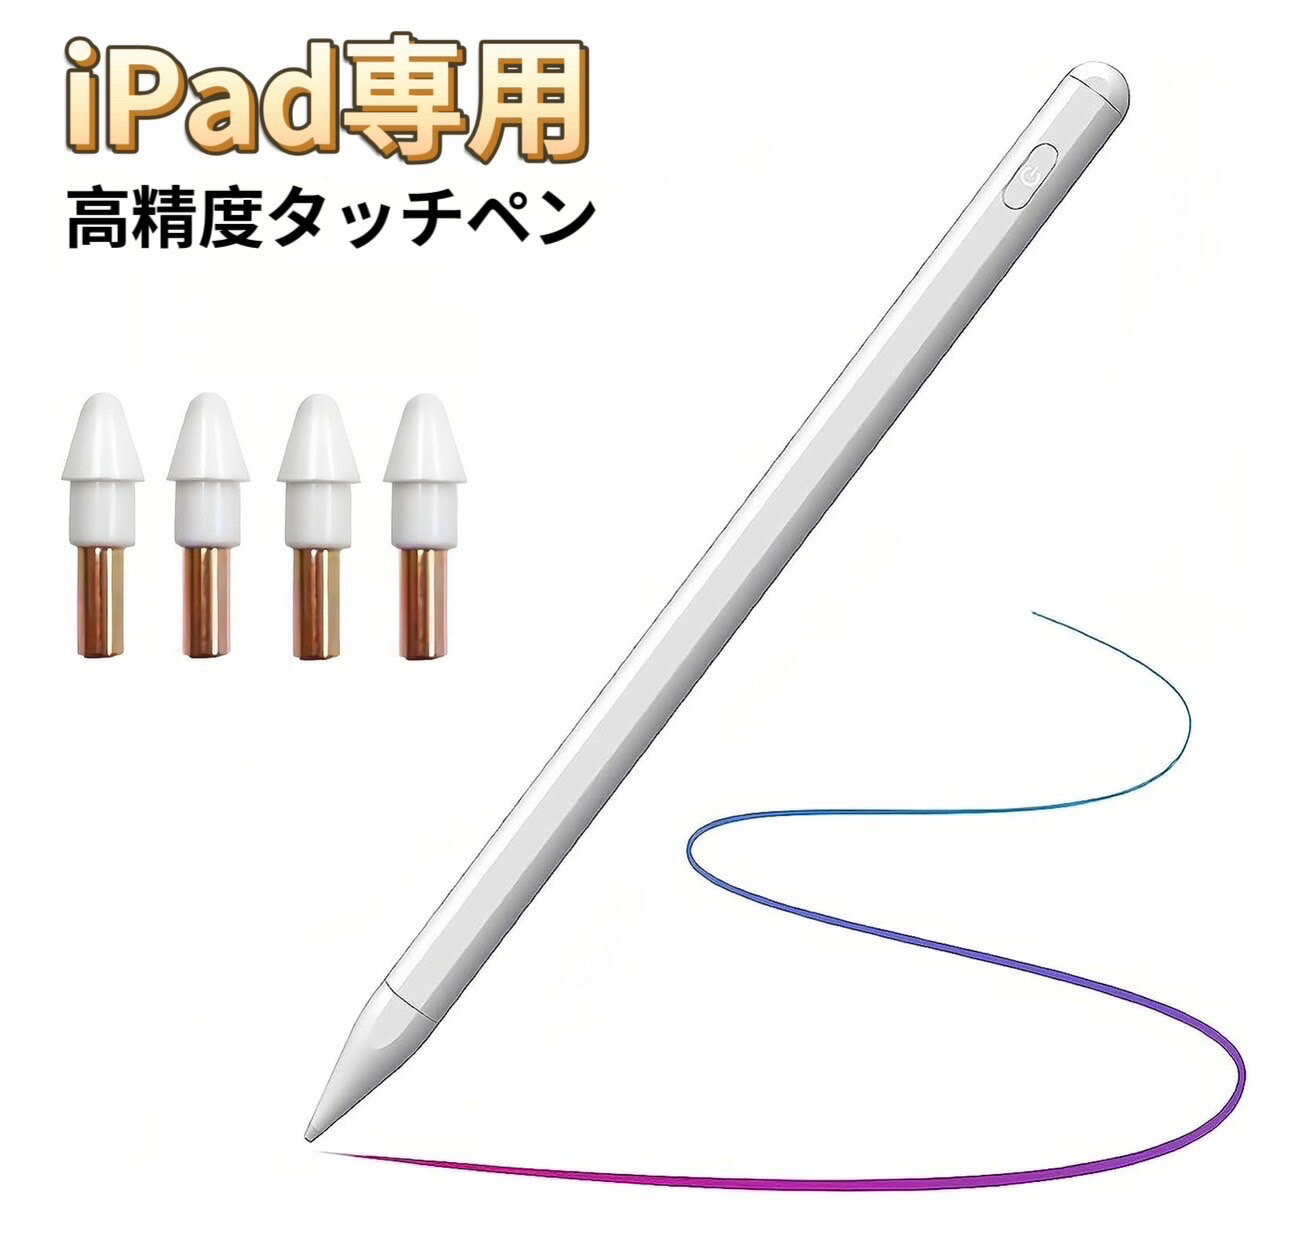 iPad ペンシル タッチペン 第10世代対応 iPad スタイラスペン iPad pen 極細 磁気吸着/誤作動防止機能対応 アイパッド ペン USB急速充電式 2018年以降iPad/iPad Pro/iPad air/iPad mini 対応 パームリジェクション ブラック ホワイト